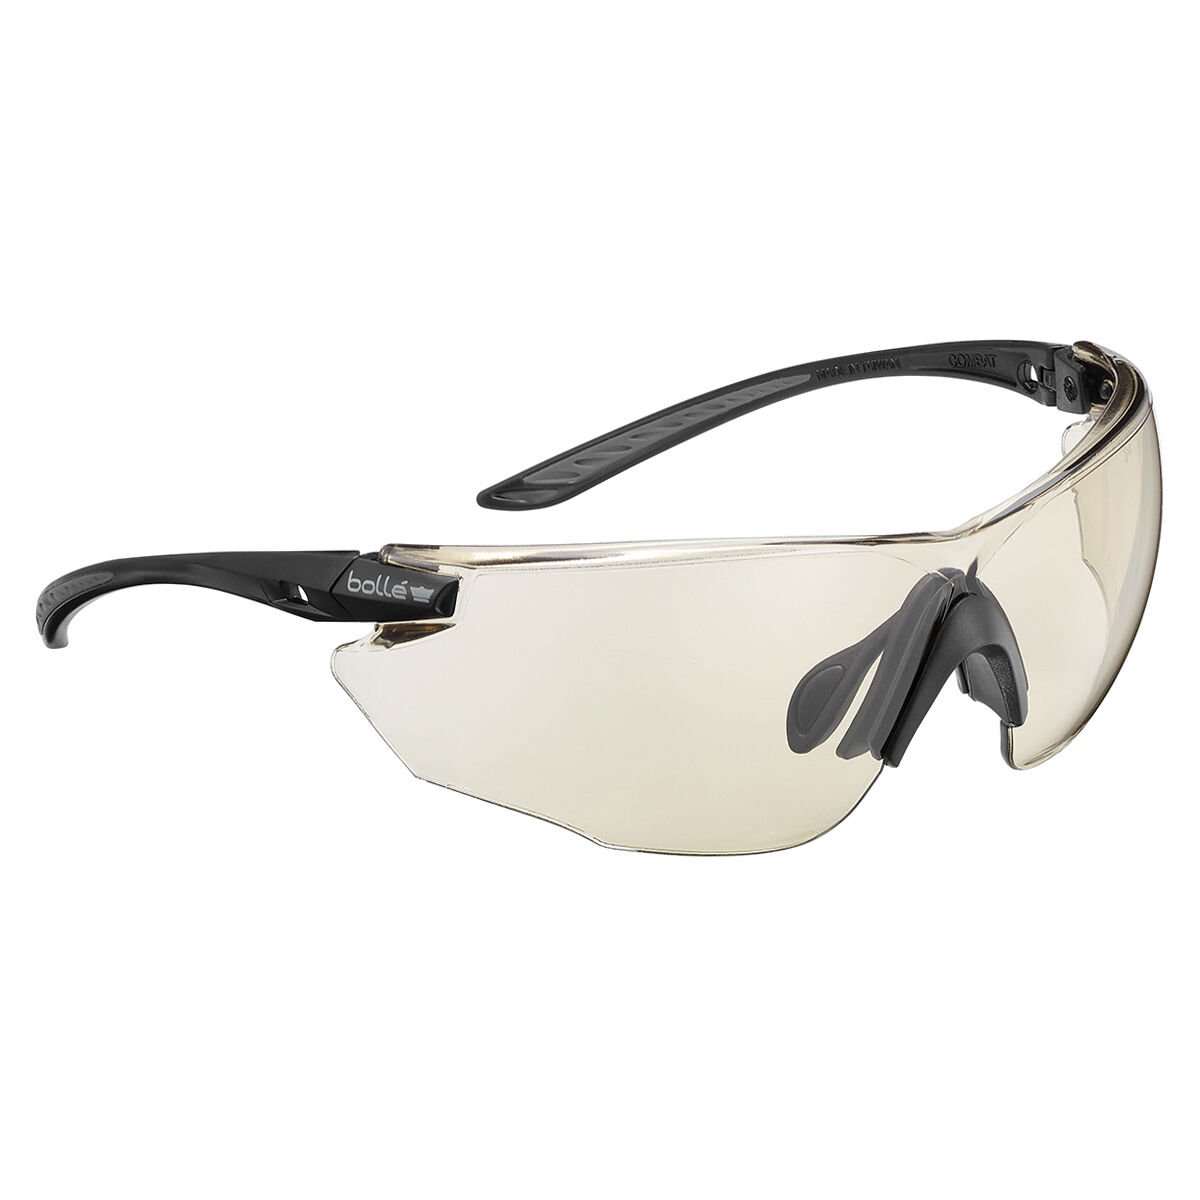 COMBAT KIT Ballistic glasses kit | Bollé Safety